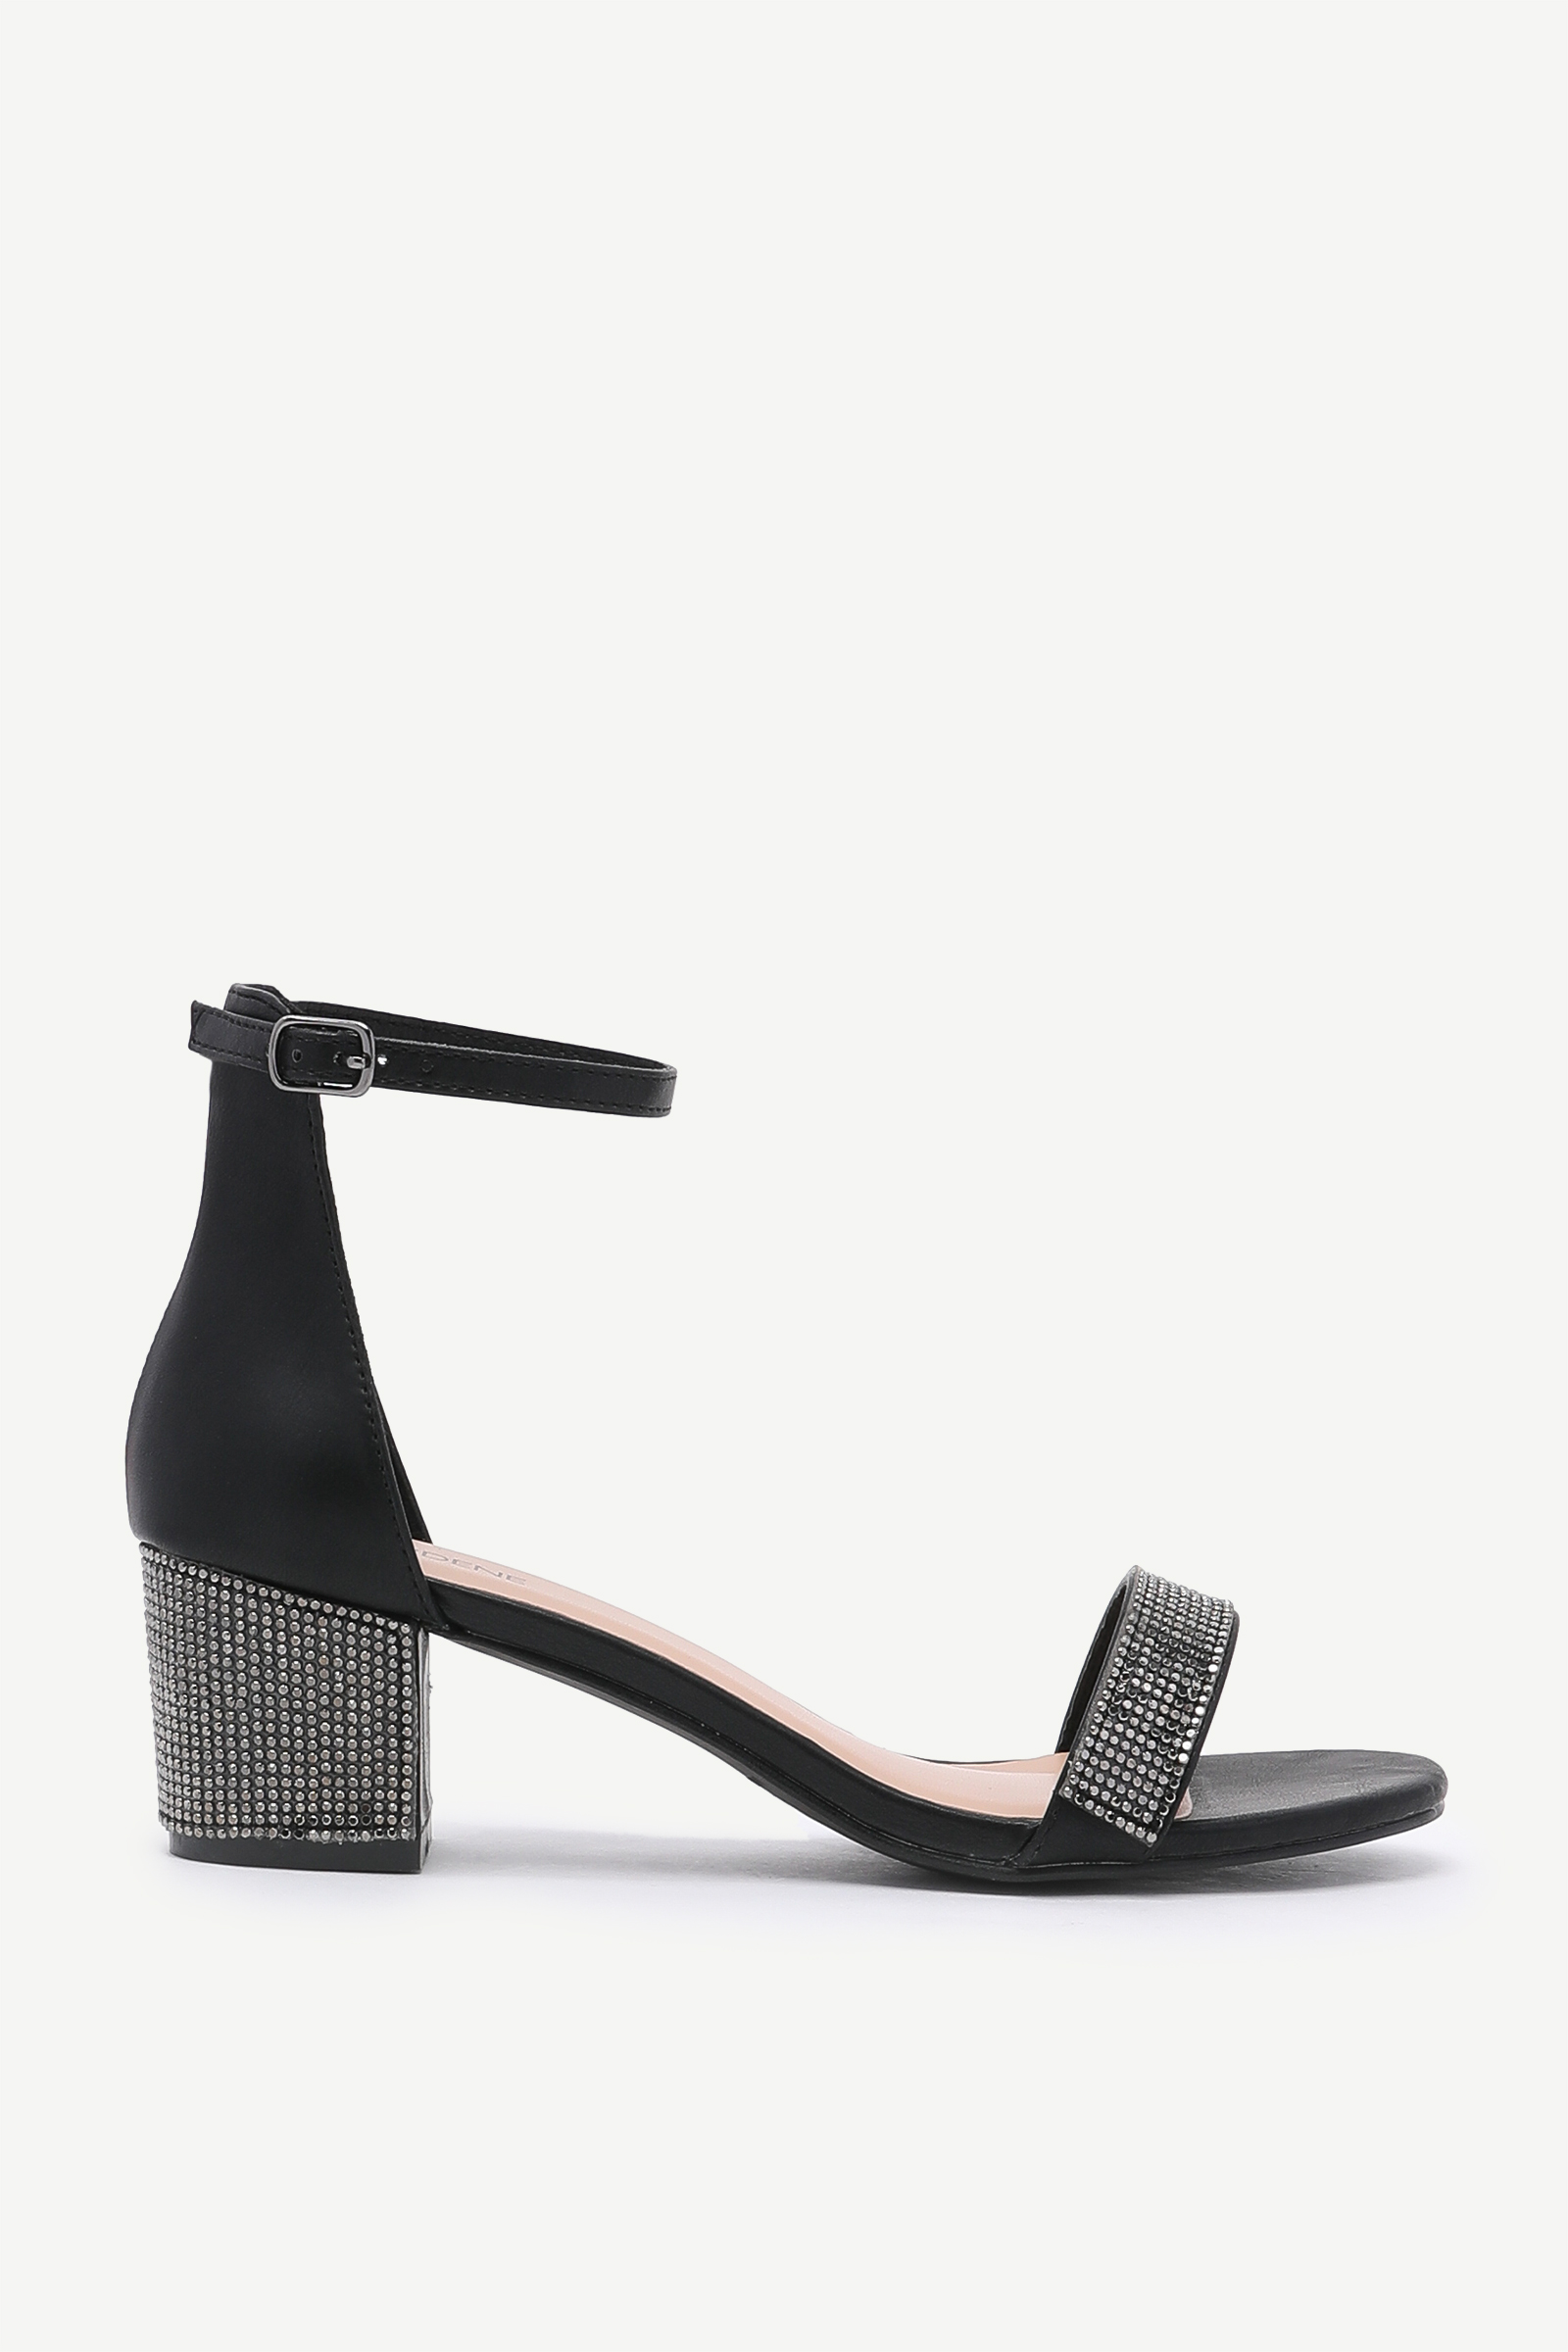 Ardene Gemstone Block Heel Sandals in Black | Women's Size 8 | Faux Leather/Rubber | Cushioned Insole